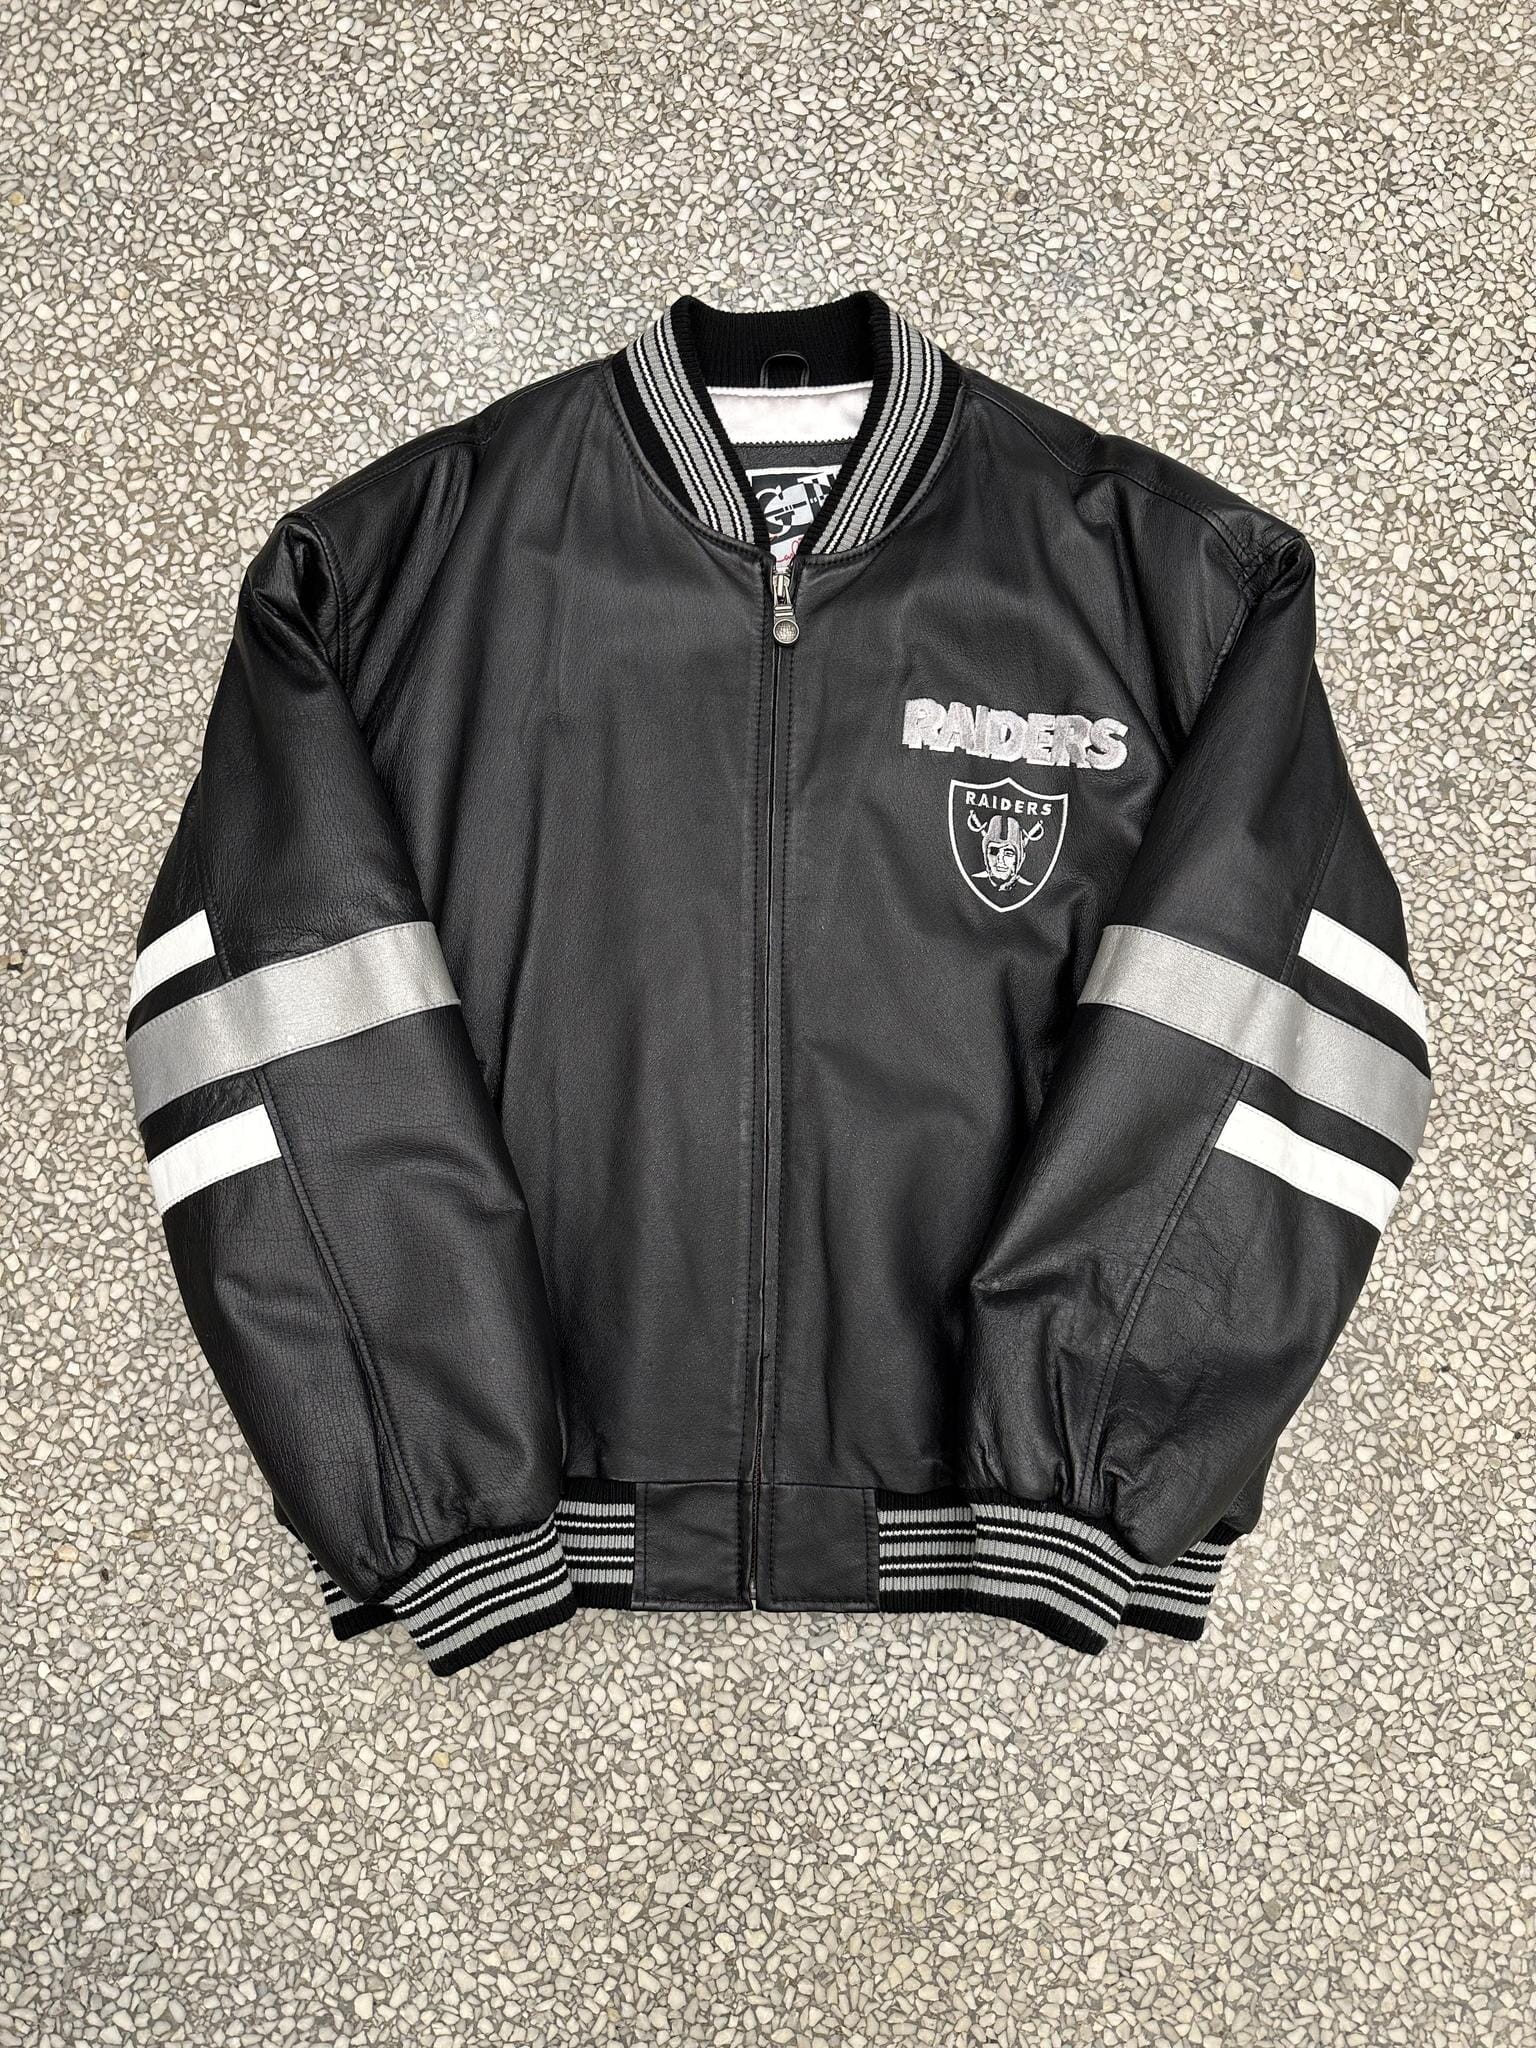 Oakland Raiders Vintage 90s Leather Bomber Jacket